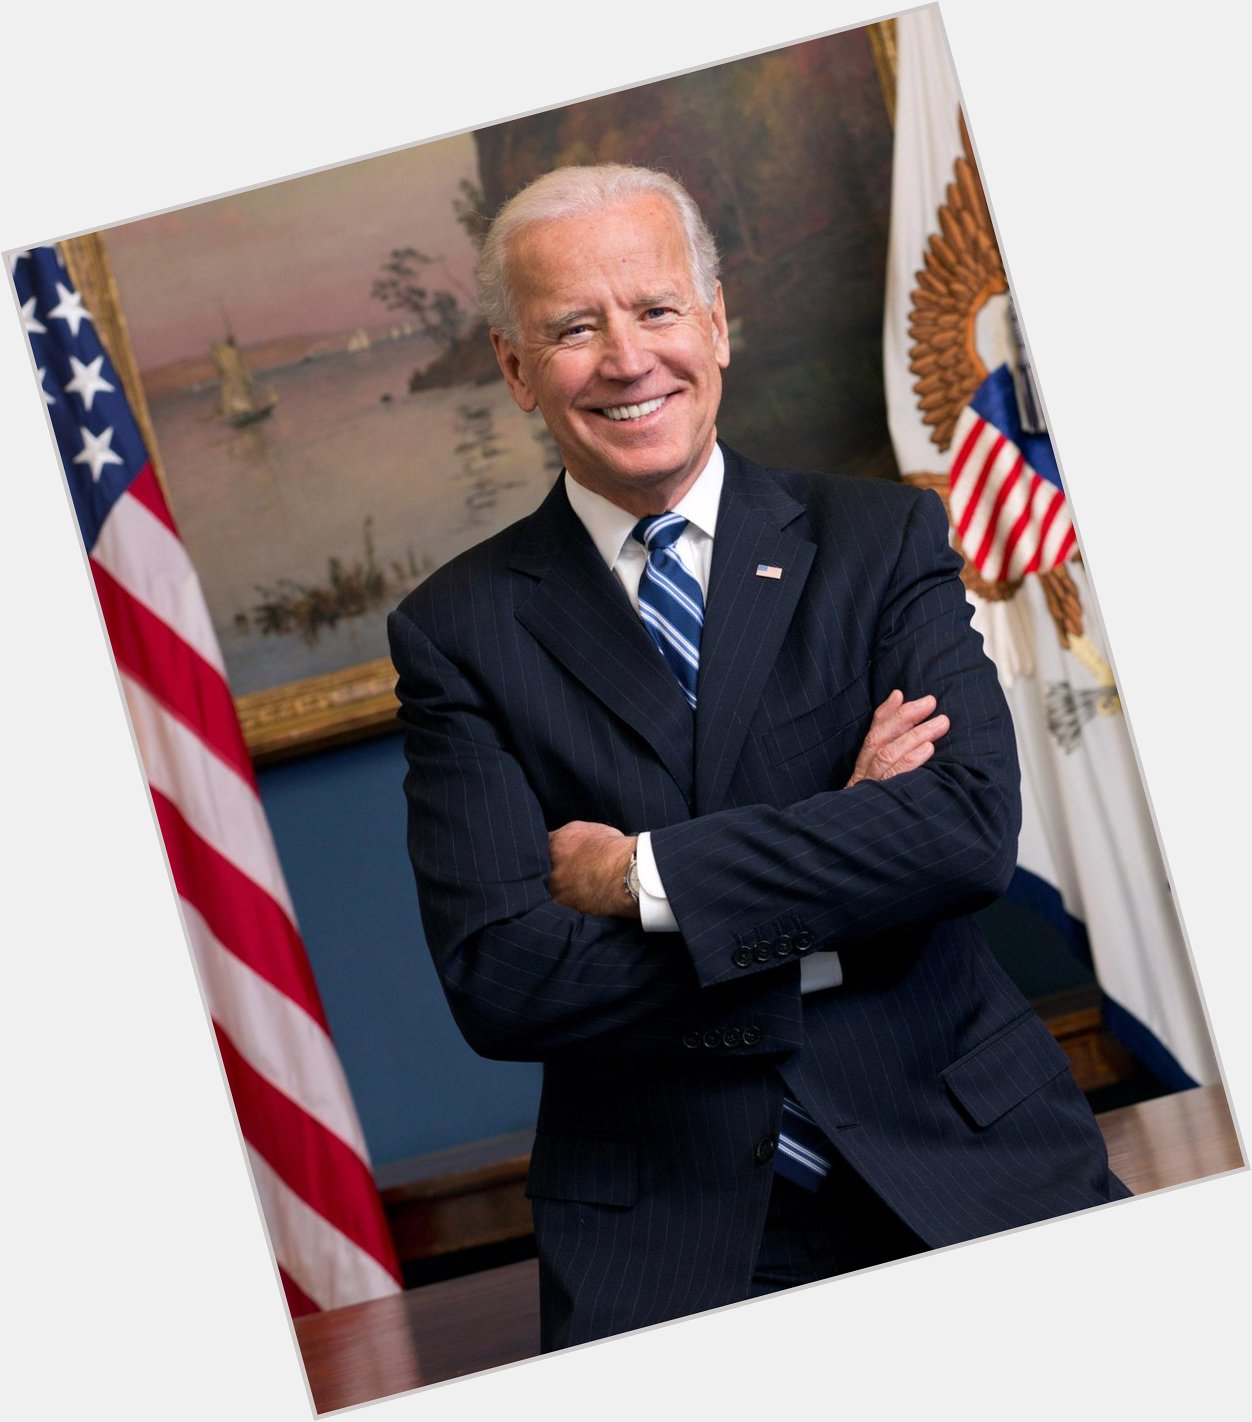 Happy Birthday to Vice President Joe Biden, who turns 72 today! 